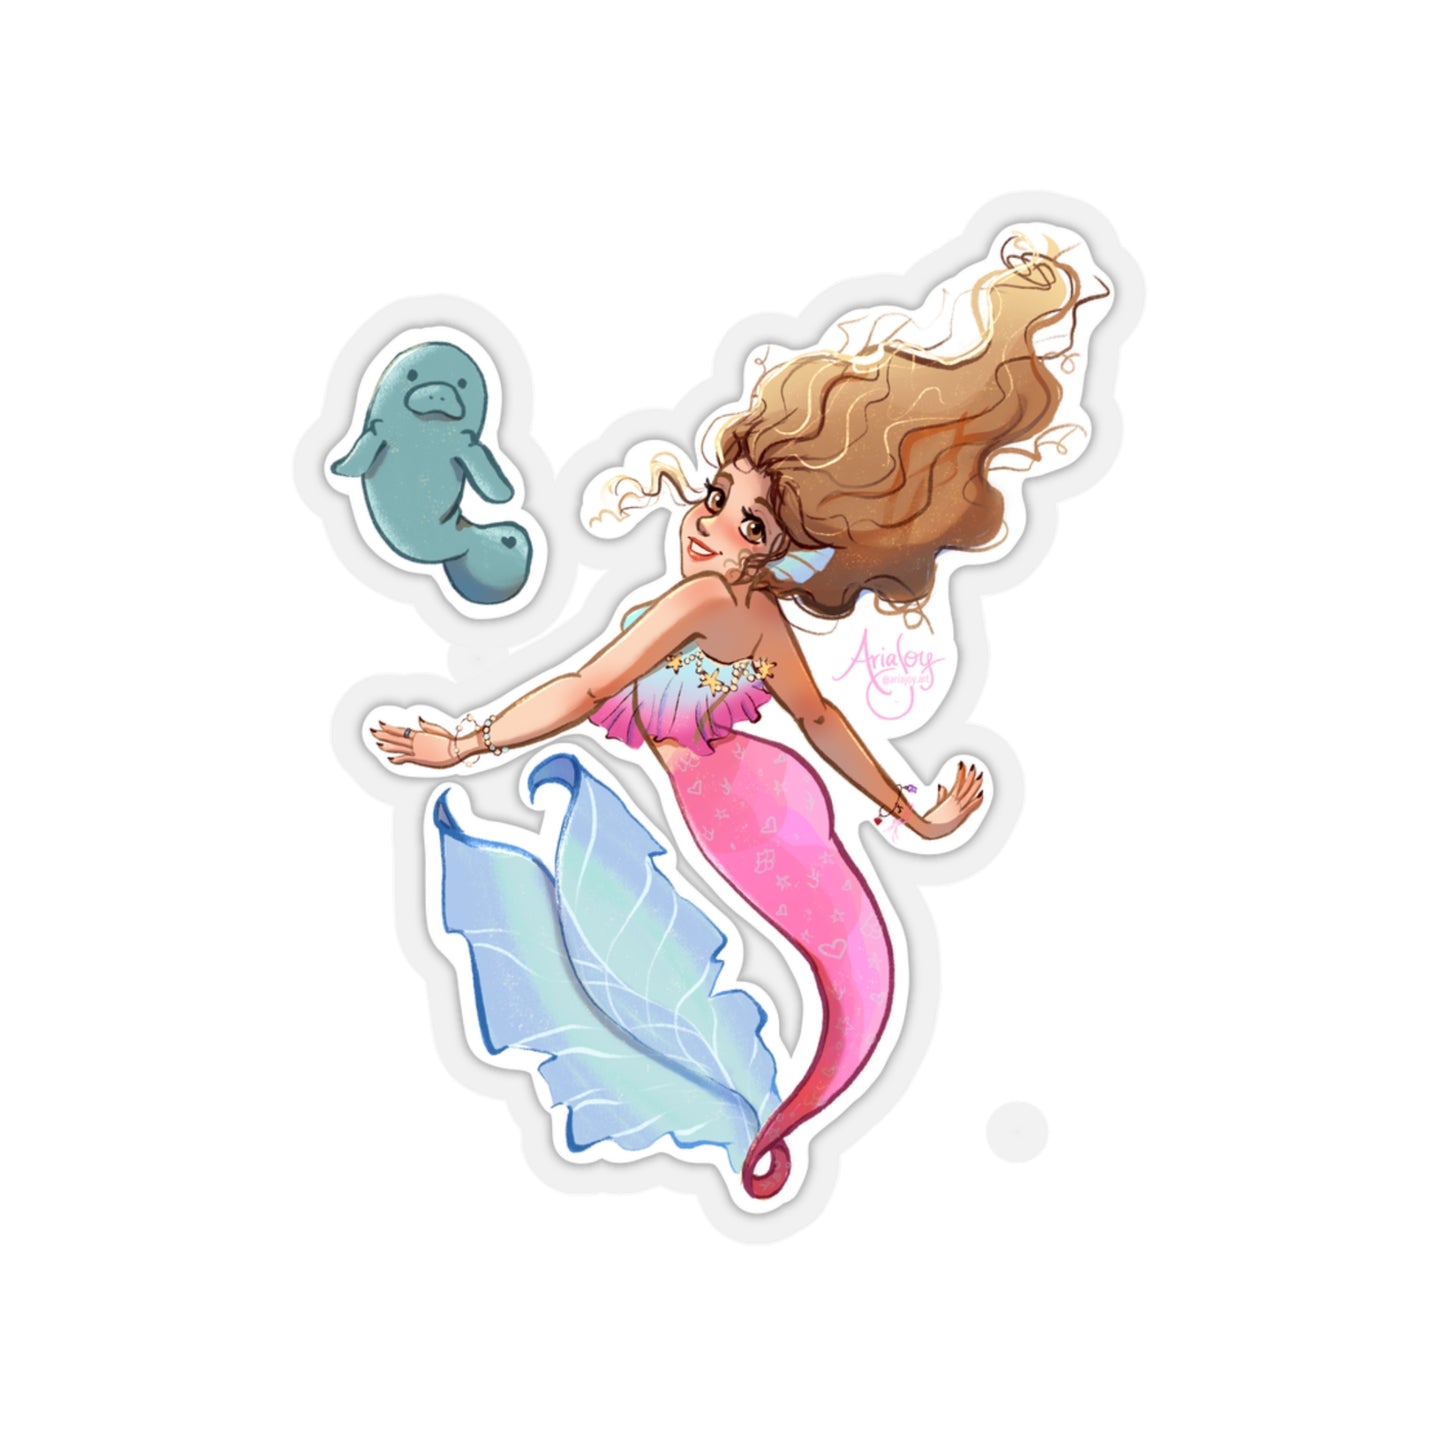 Marina the Mermaid Sticker